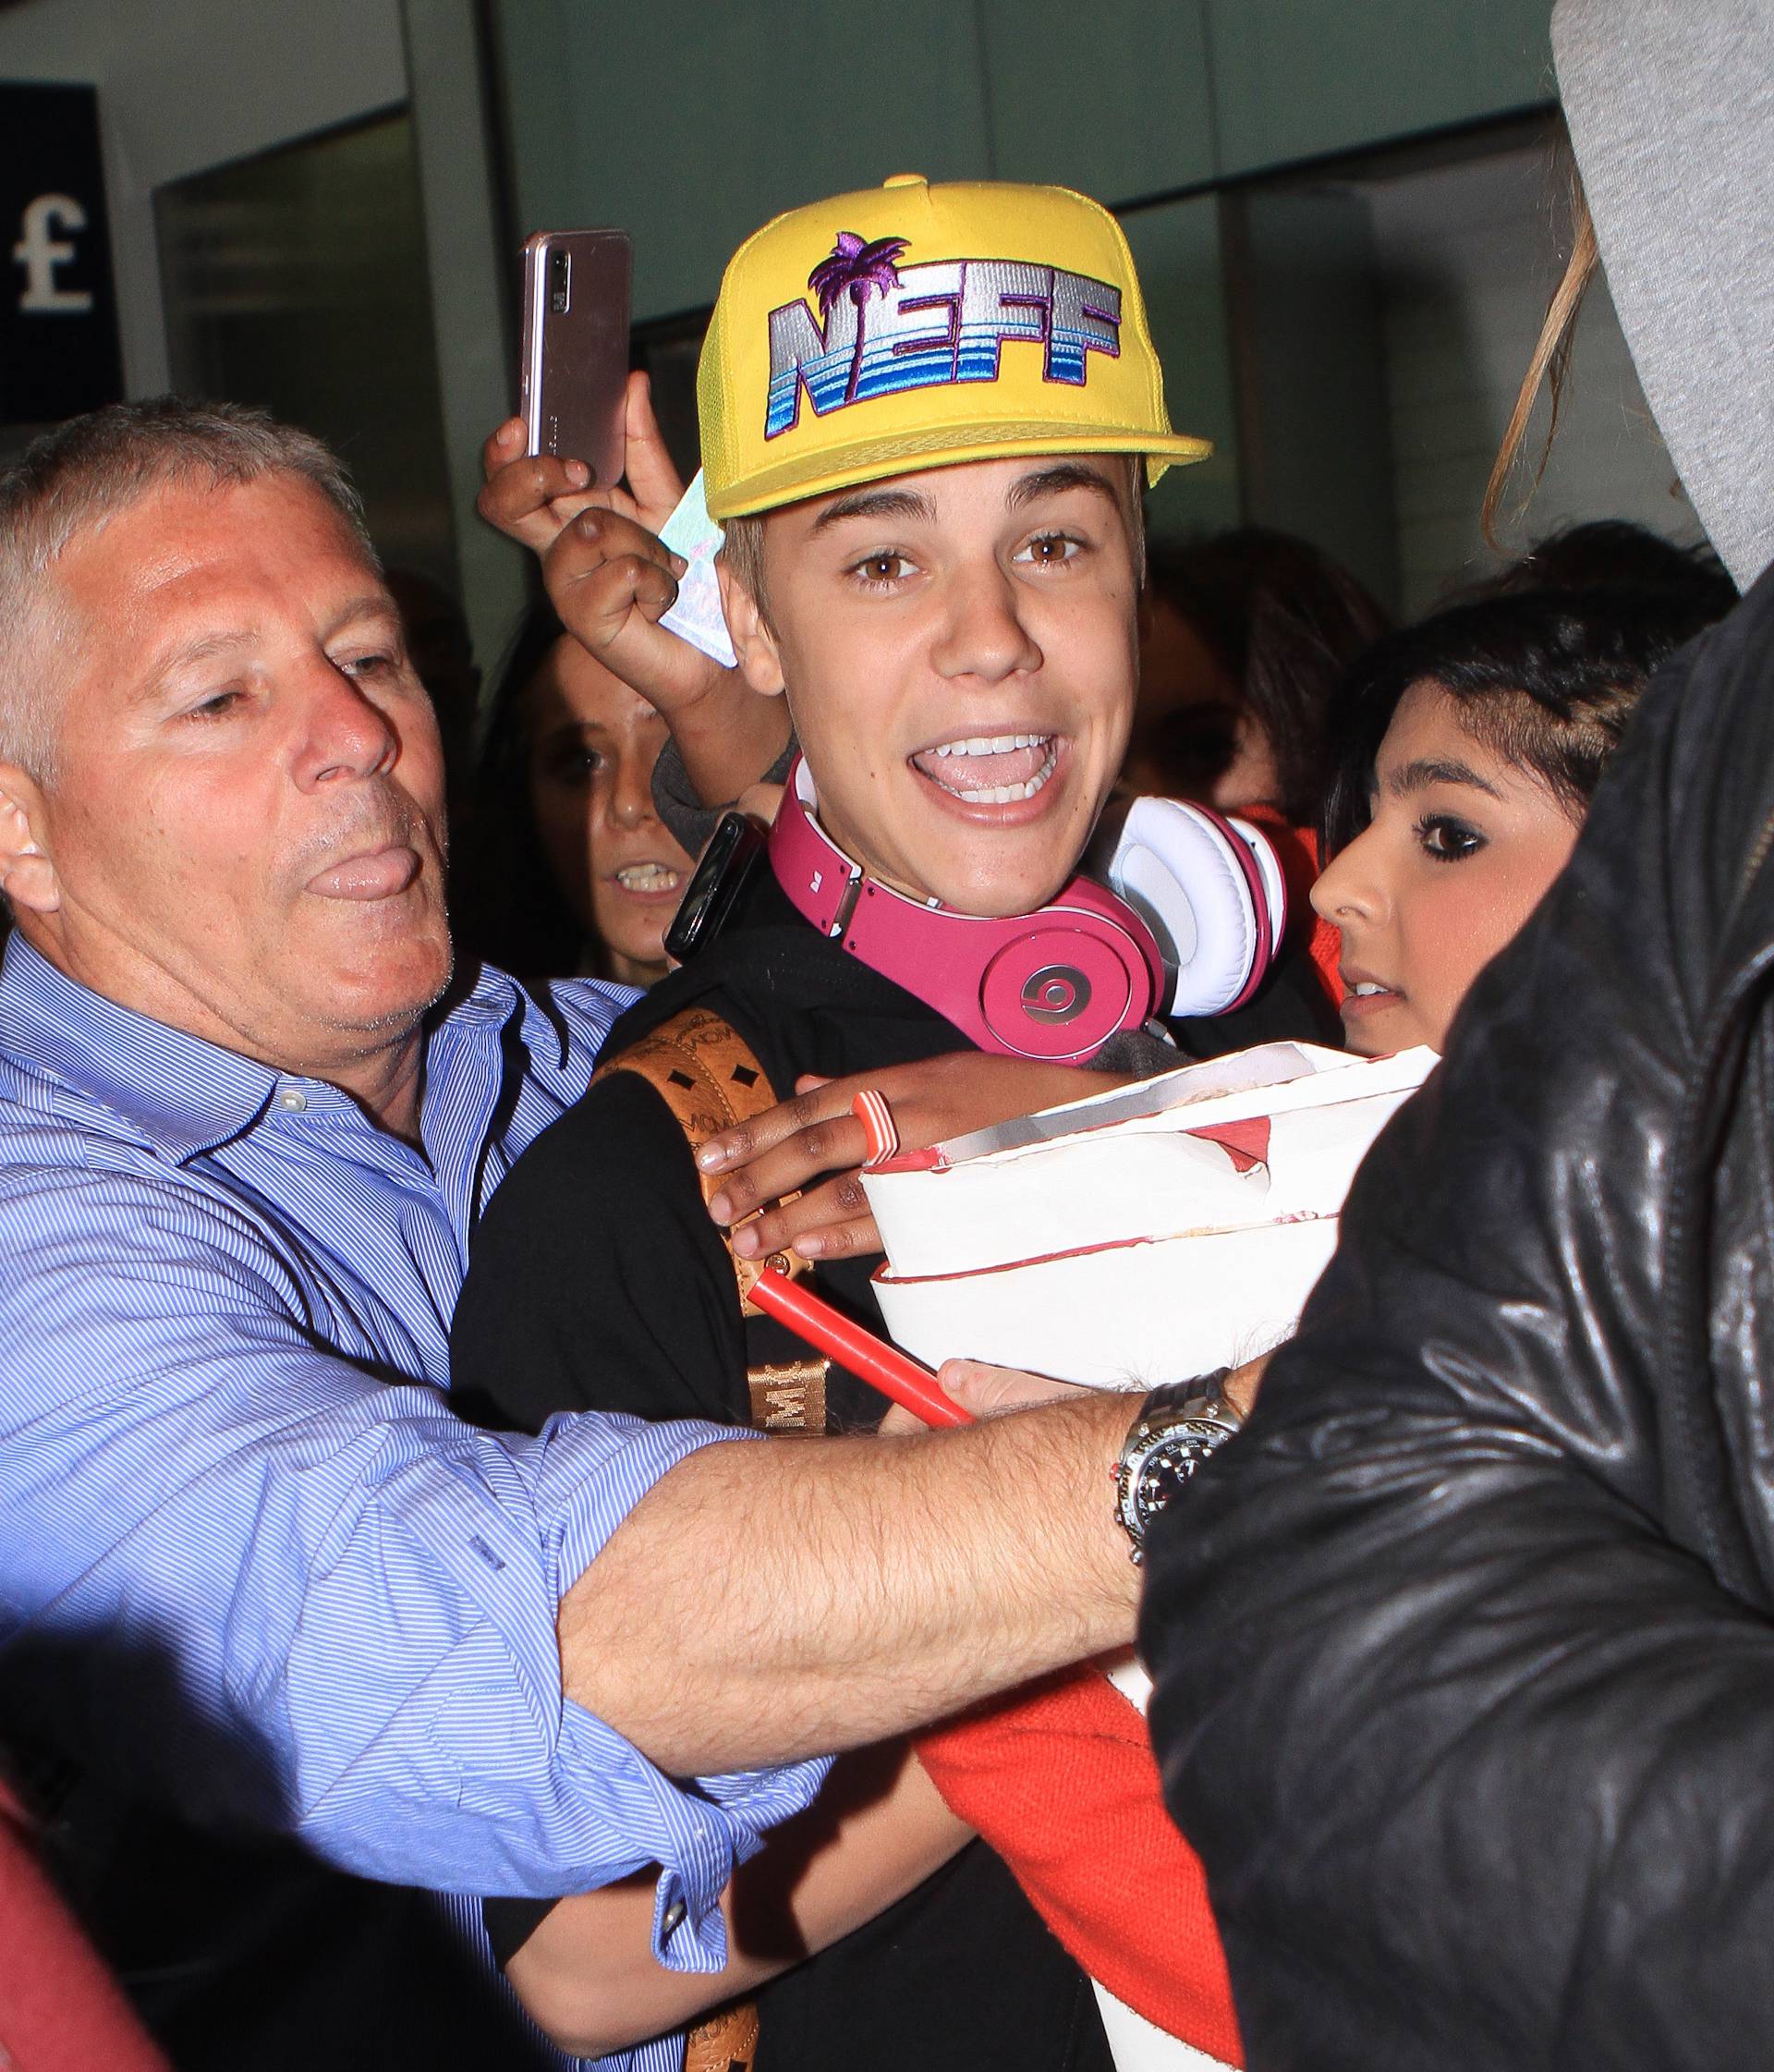 Bieber Fever at London's Heathrow Airport, UK